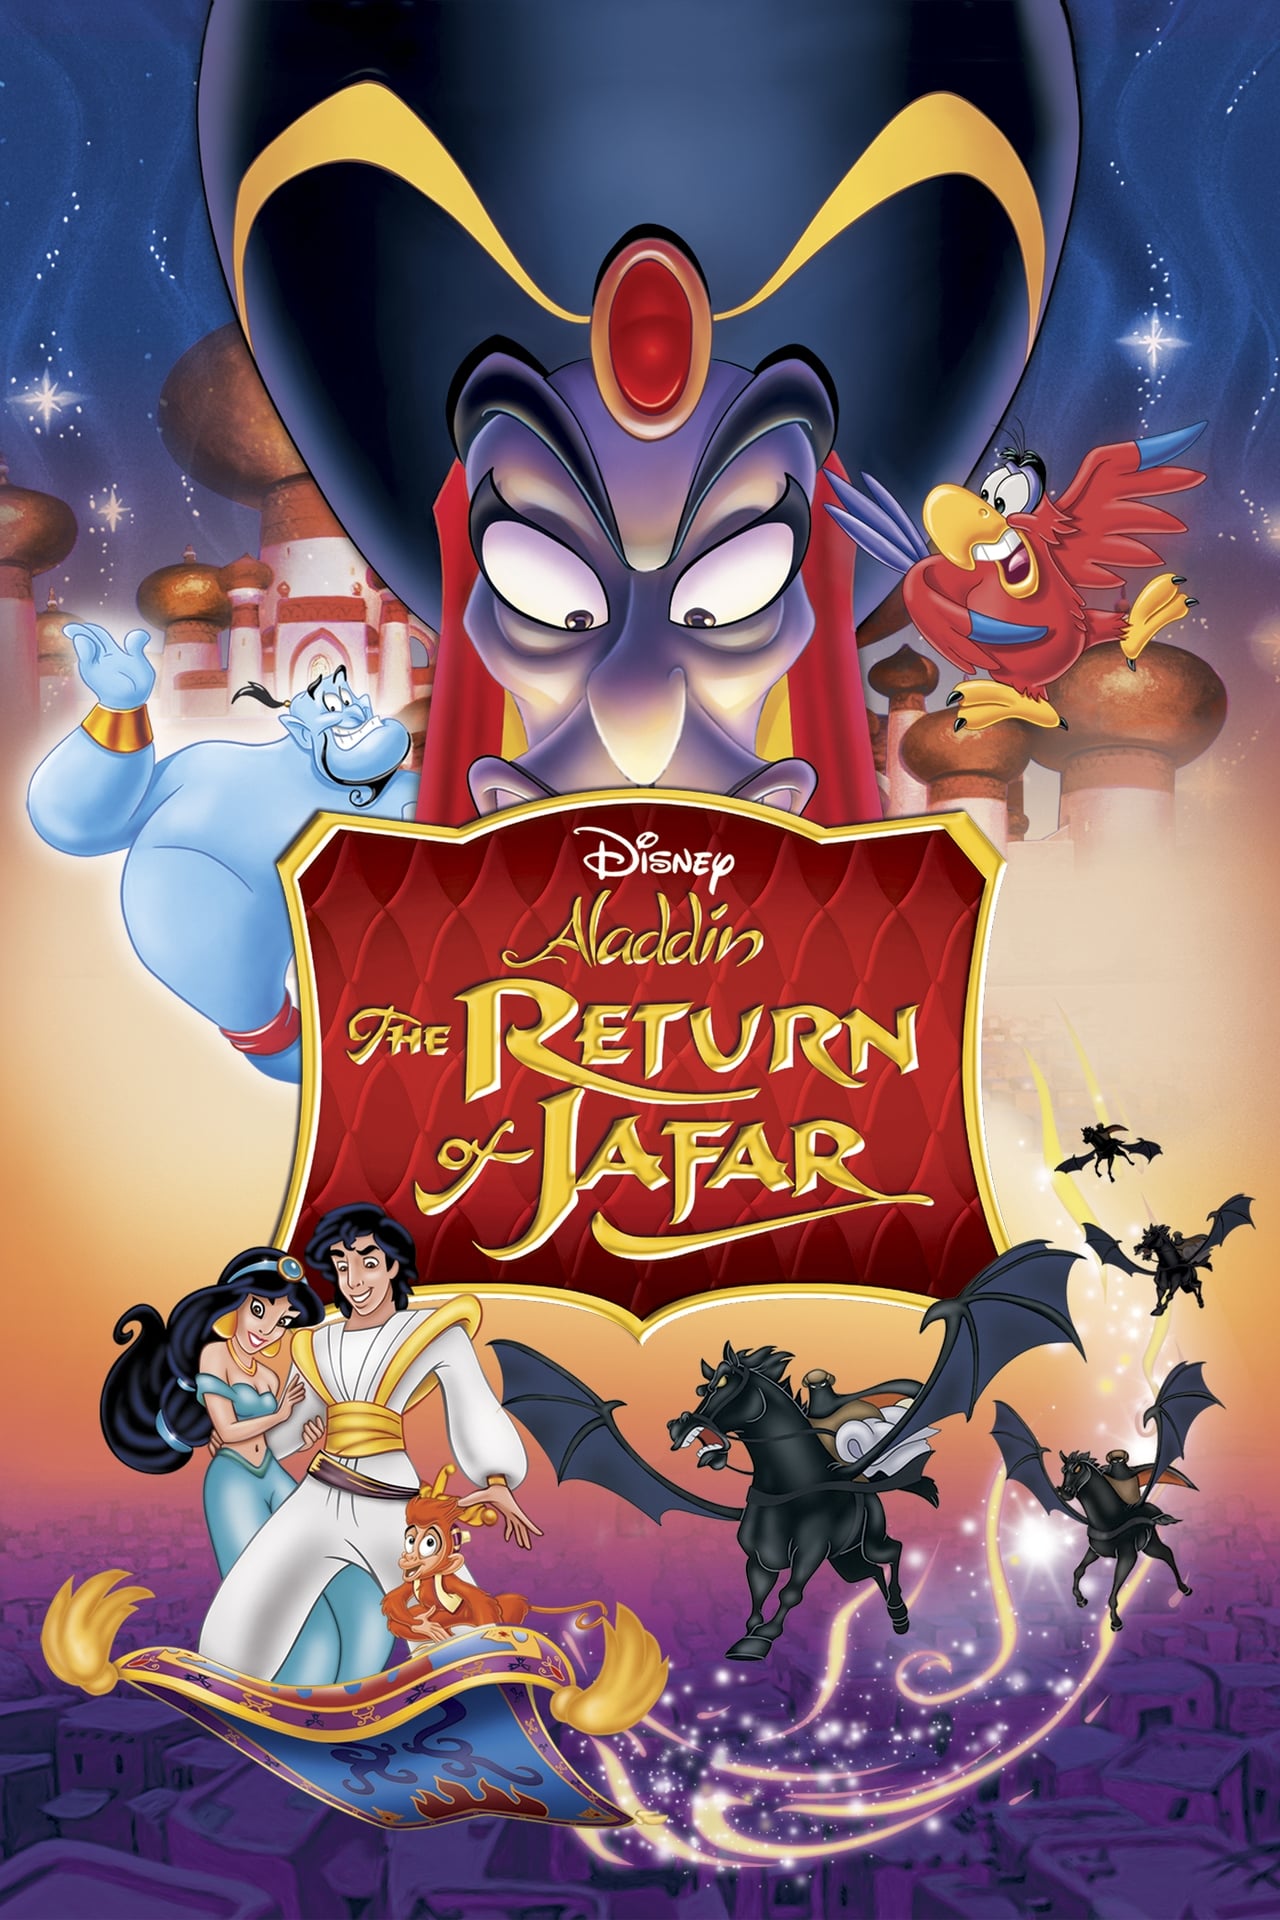 EN - The Return Of Jafar (1994) ALADDIN COLLECTION